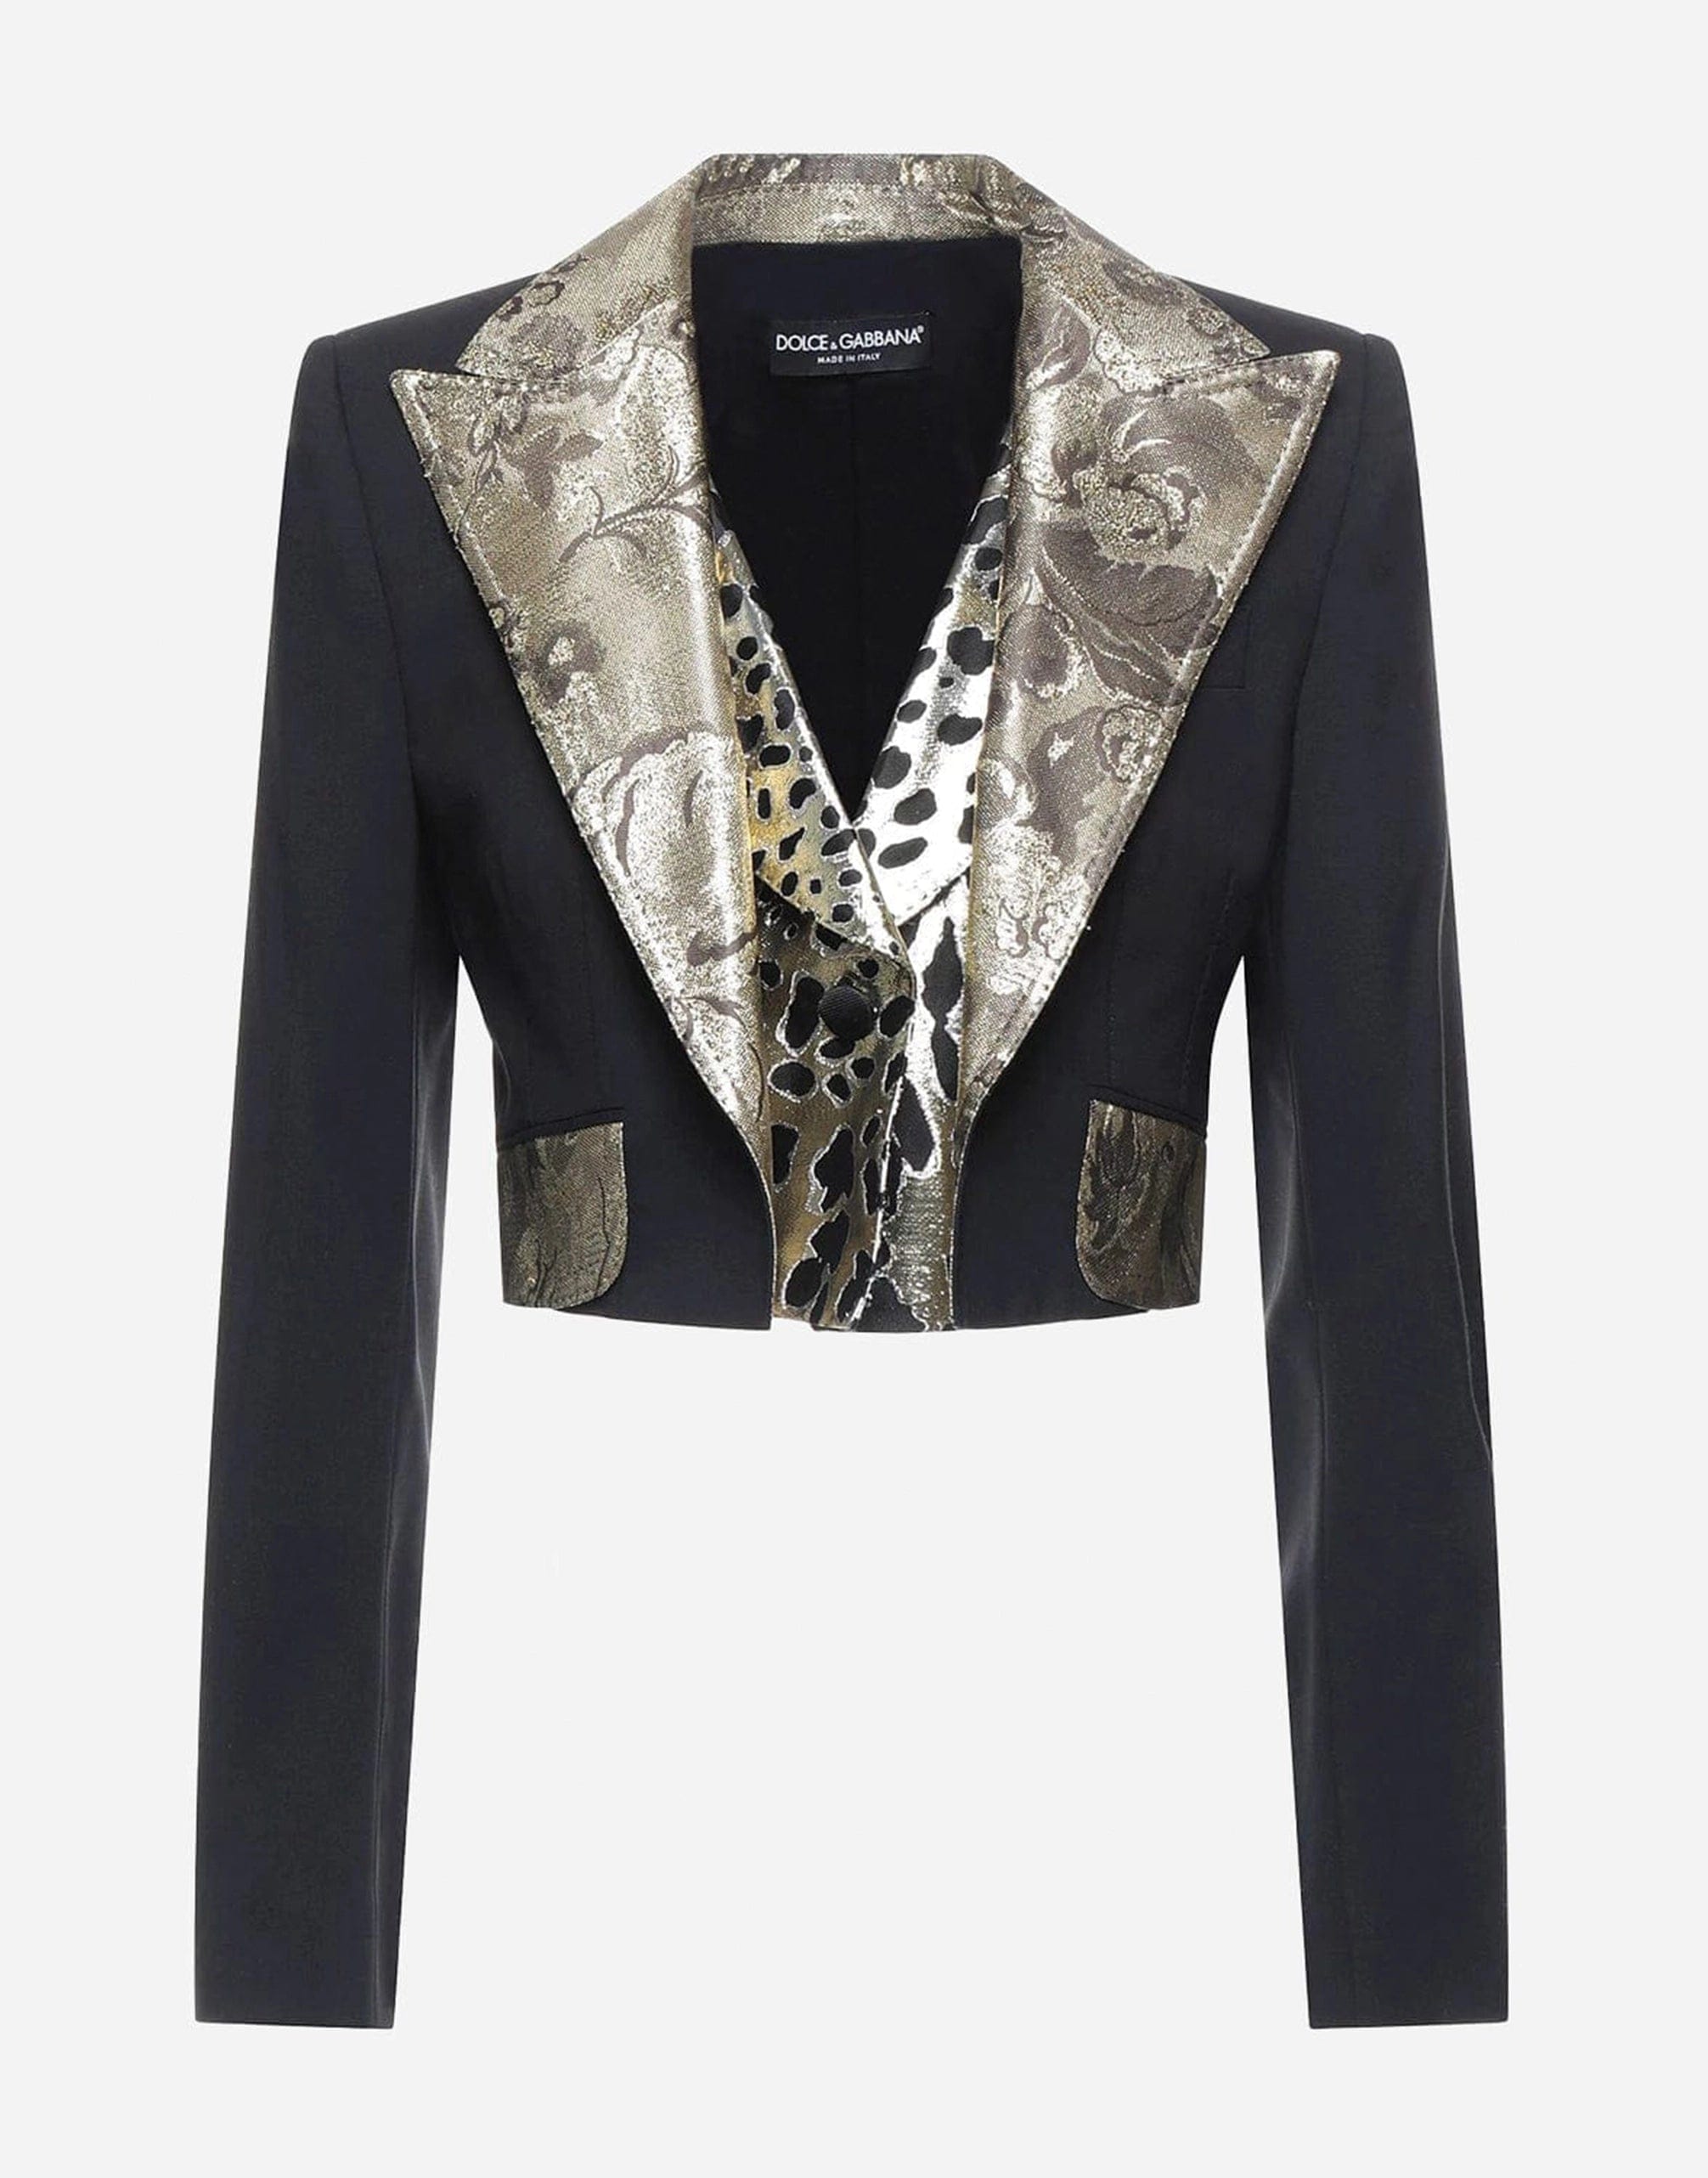 Dolce & Gabbana Jacquard Cropped Blazer Jacket